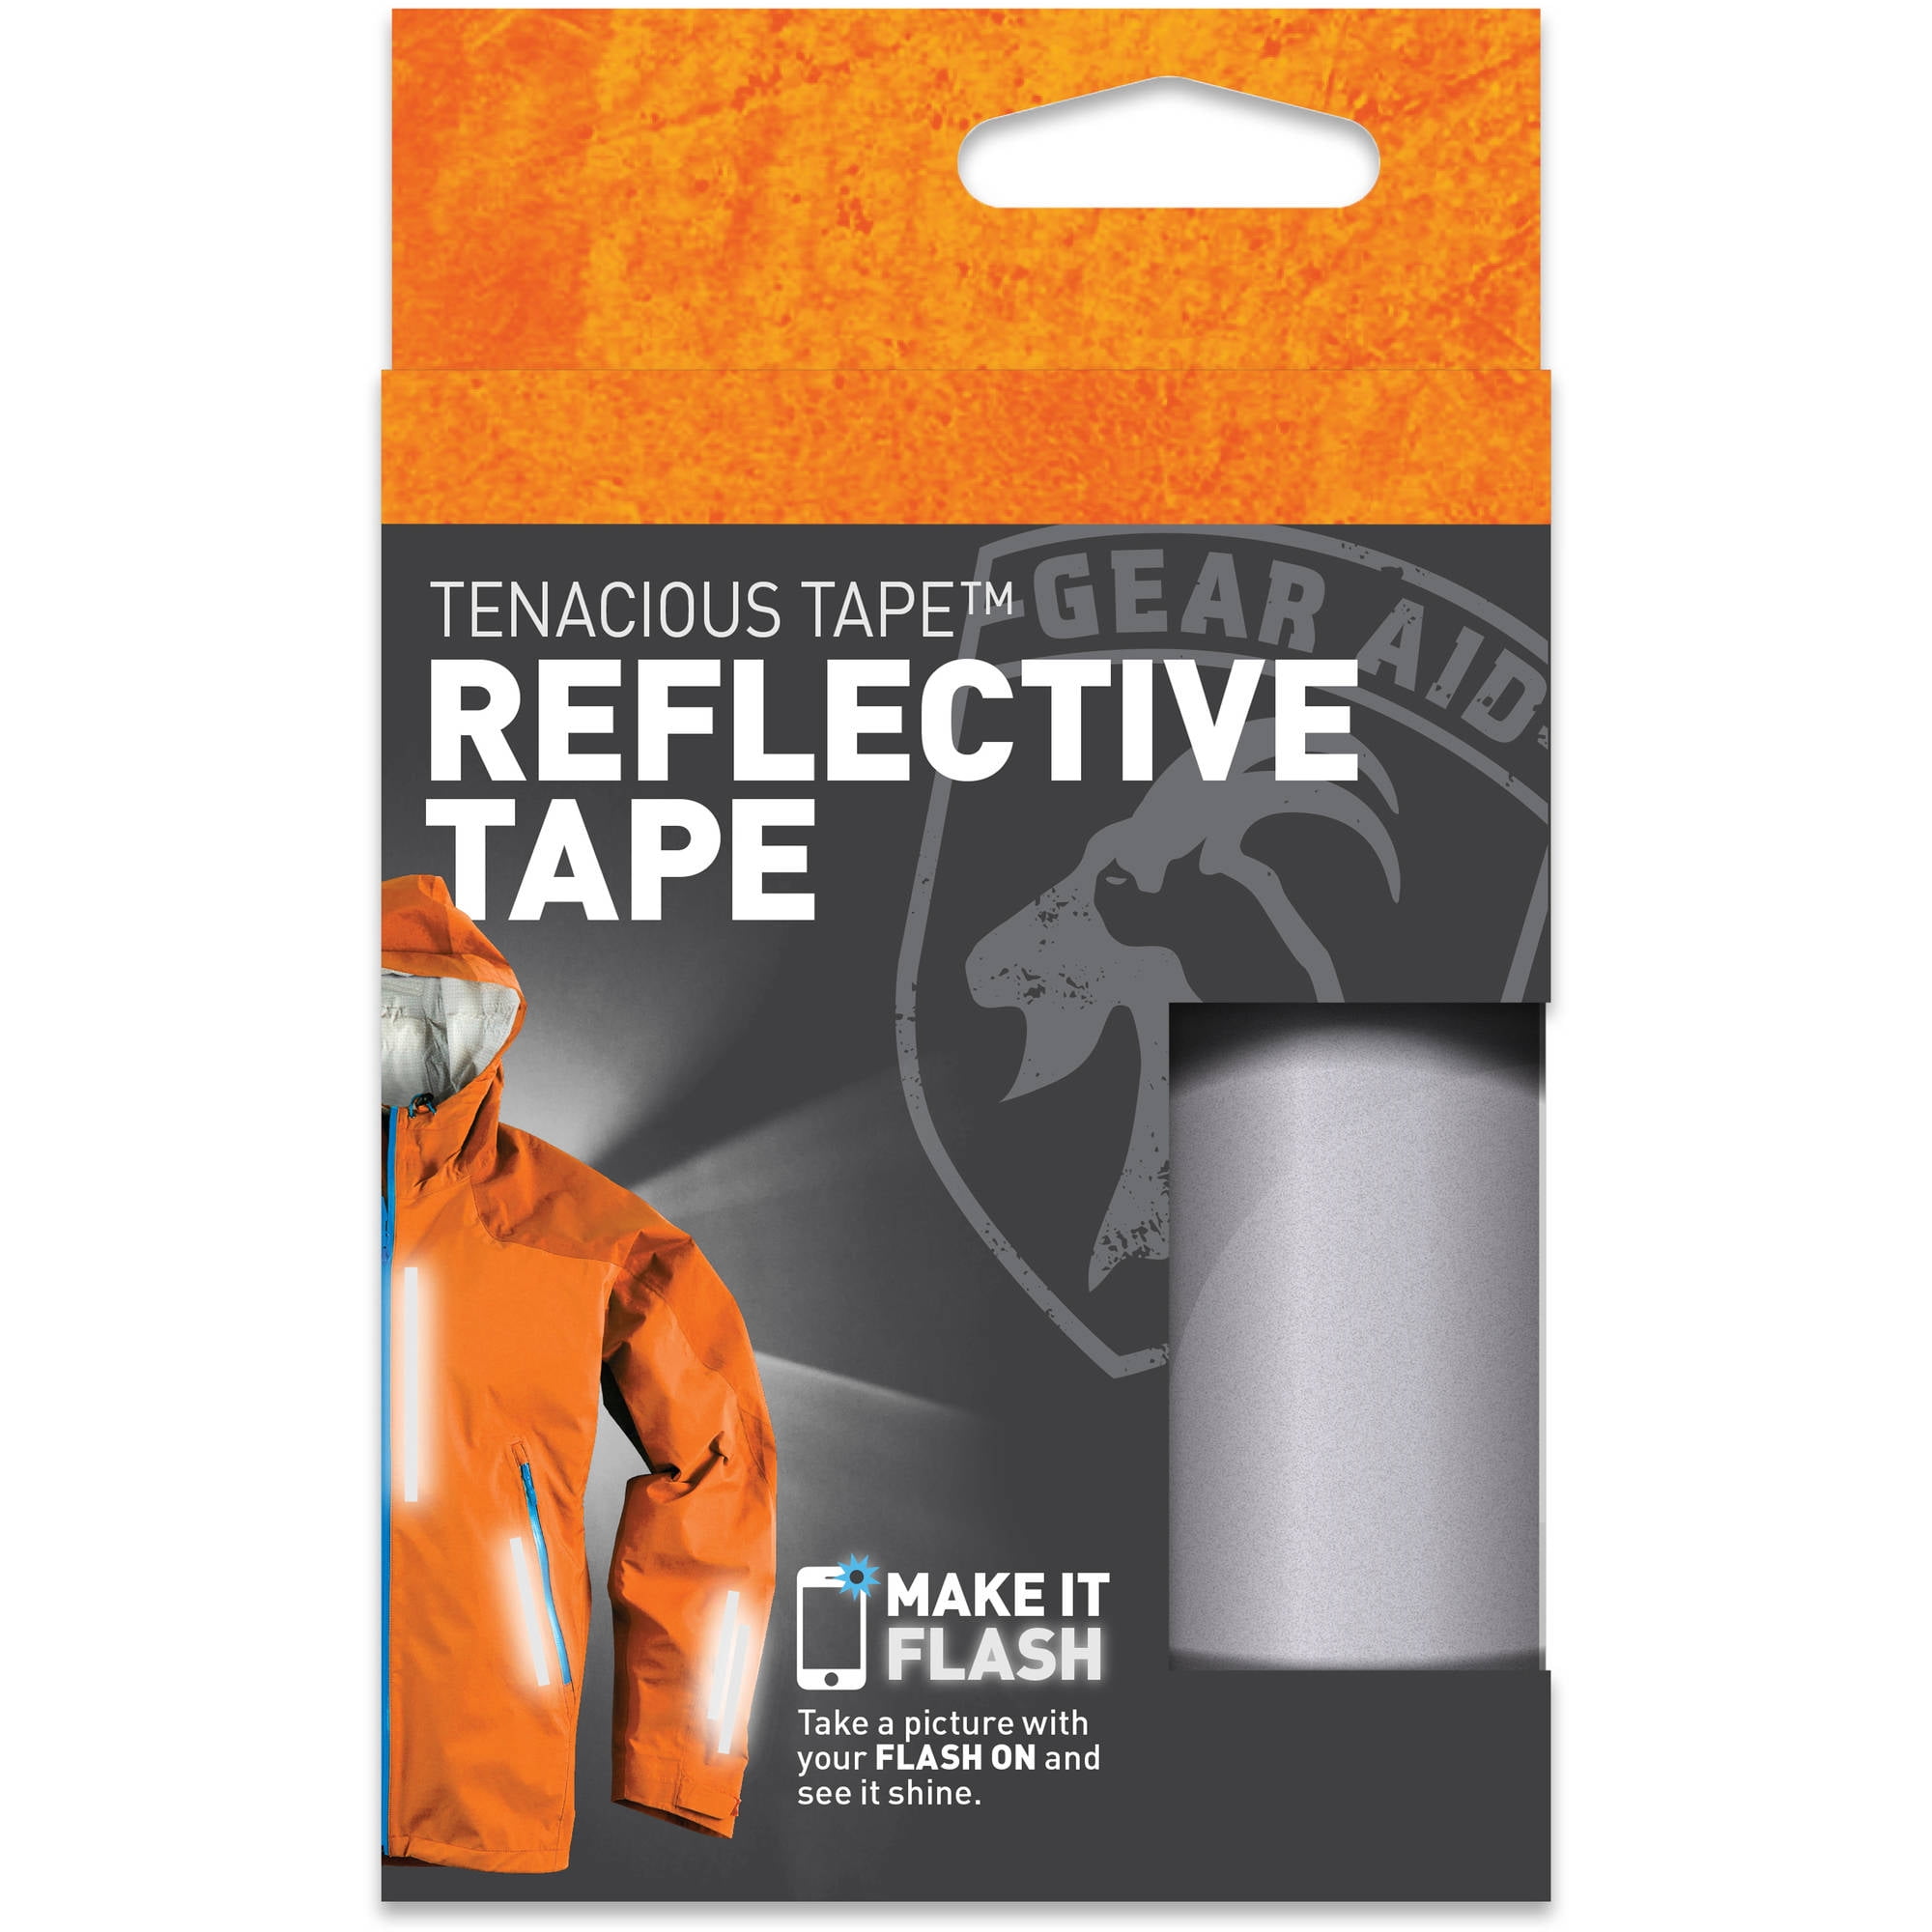 GEAR AID Tenacious Tape Ultra Strong Fabric Repair Tape Platinum 